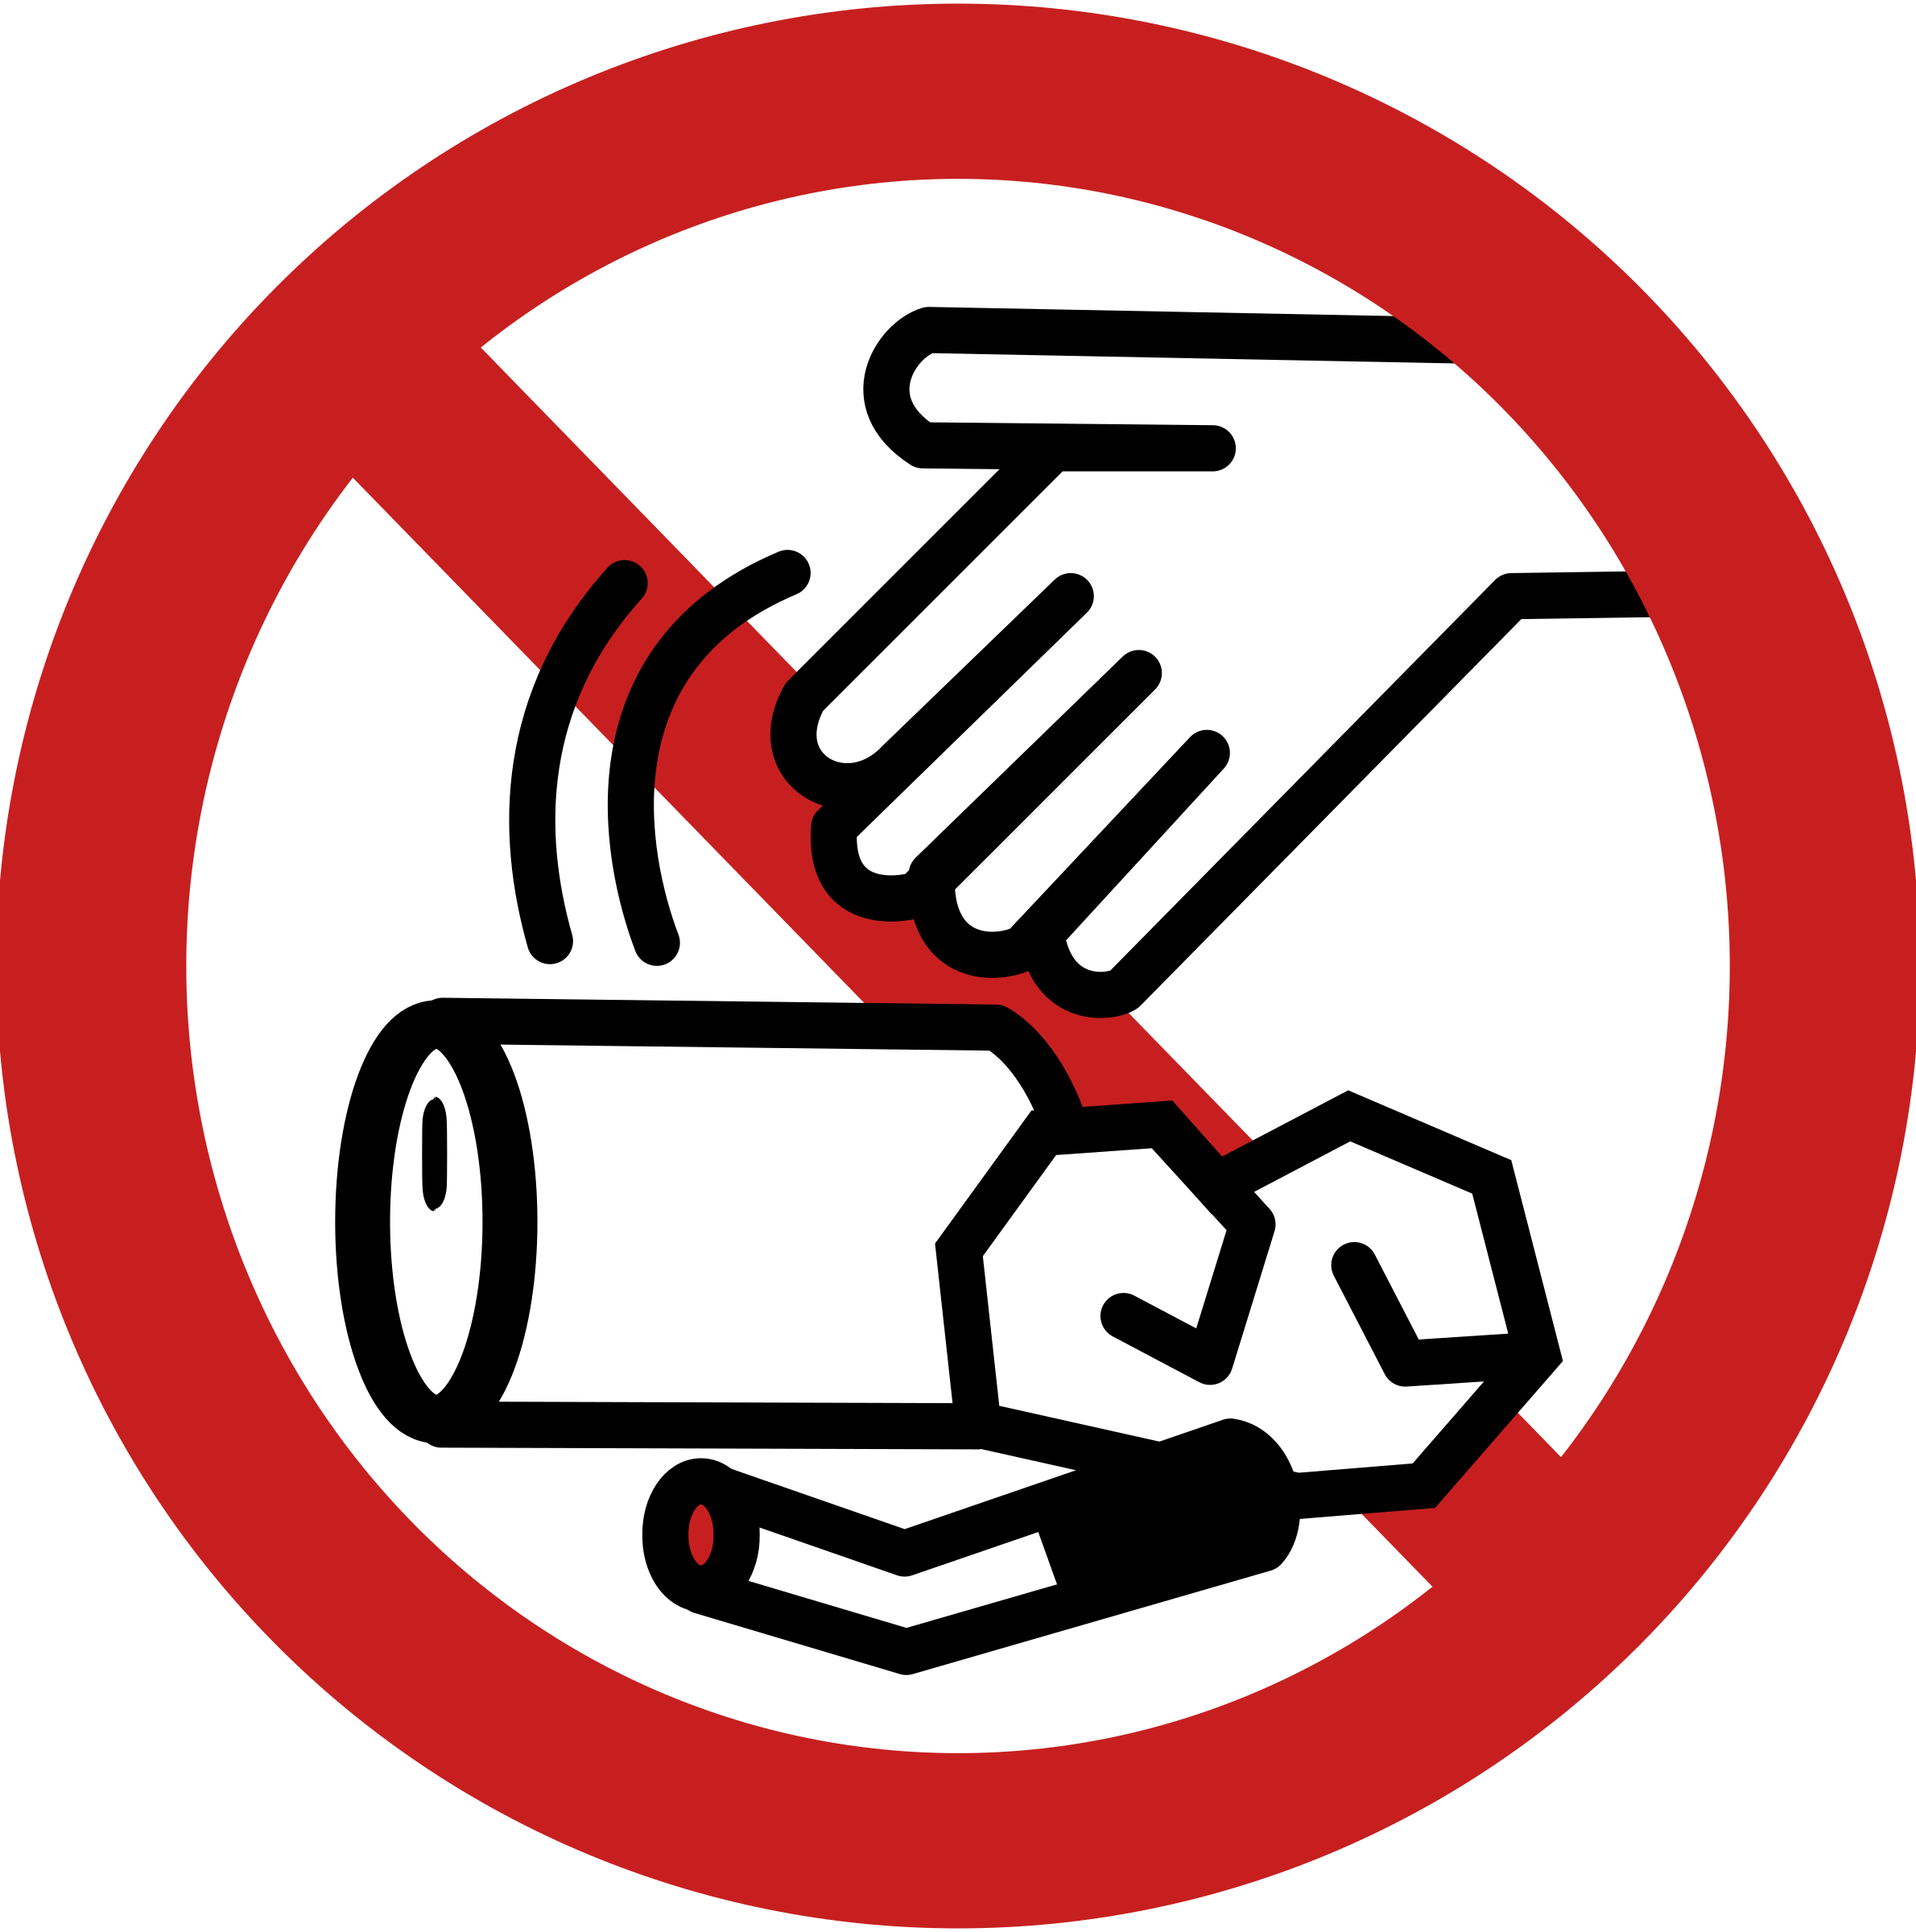 Табличка не мусорить. Знак «не мусорить». Мусорить запрещено. Знако мусорить запрещено. Знак зарпещающие мусорить.